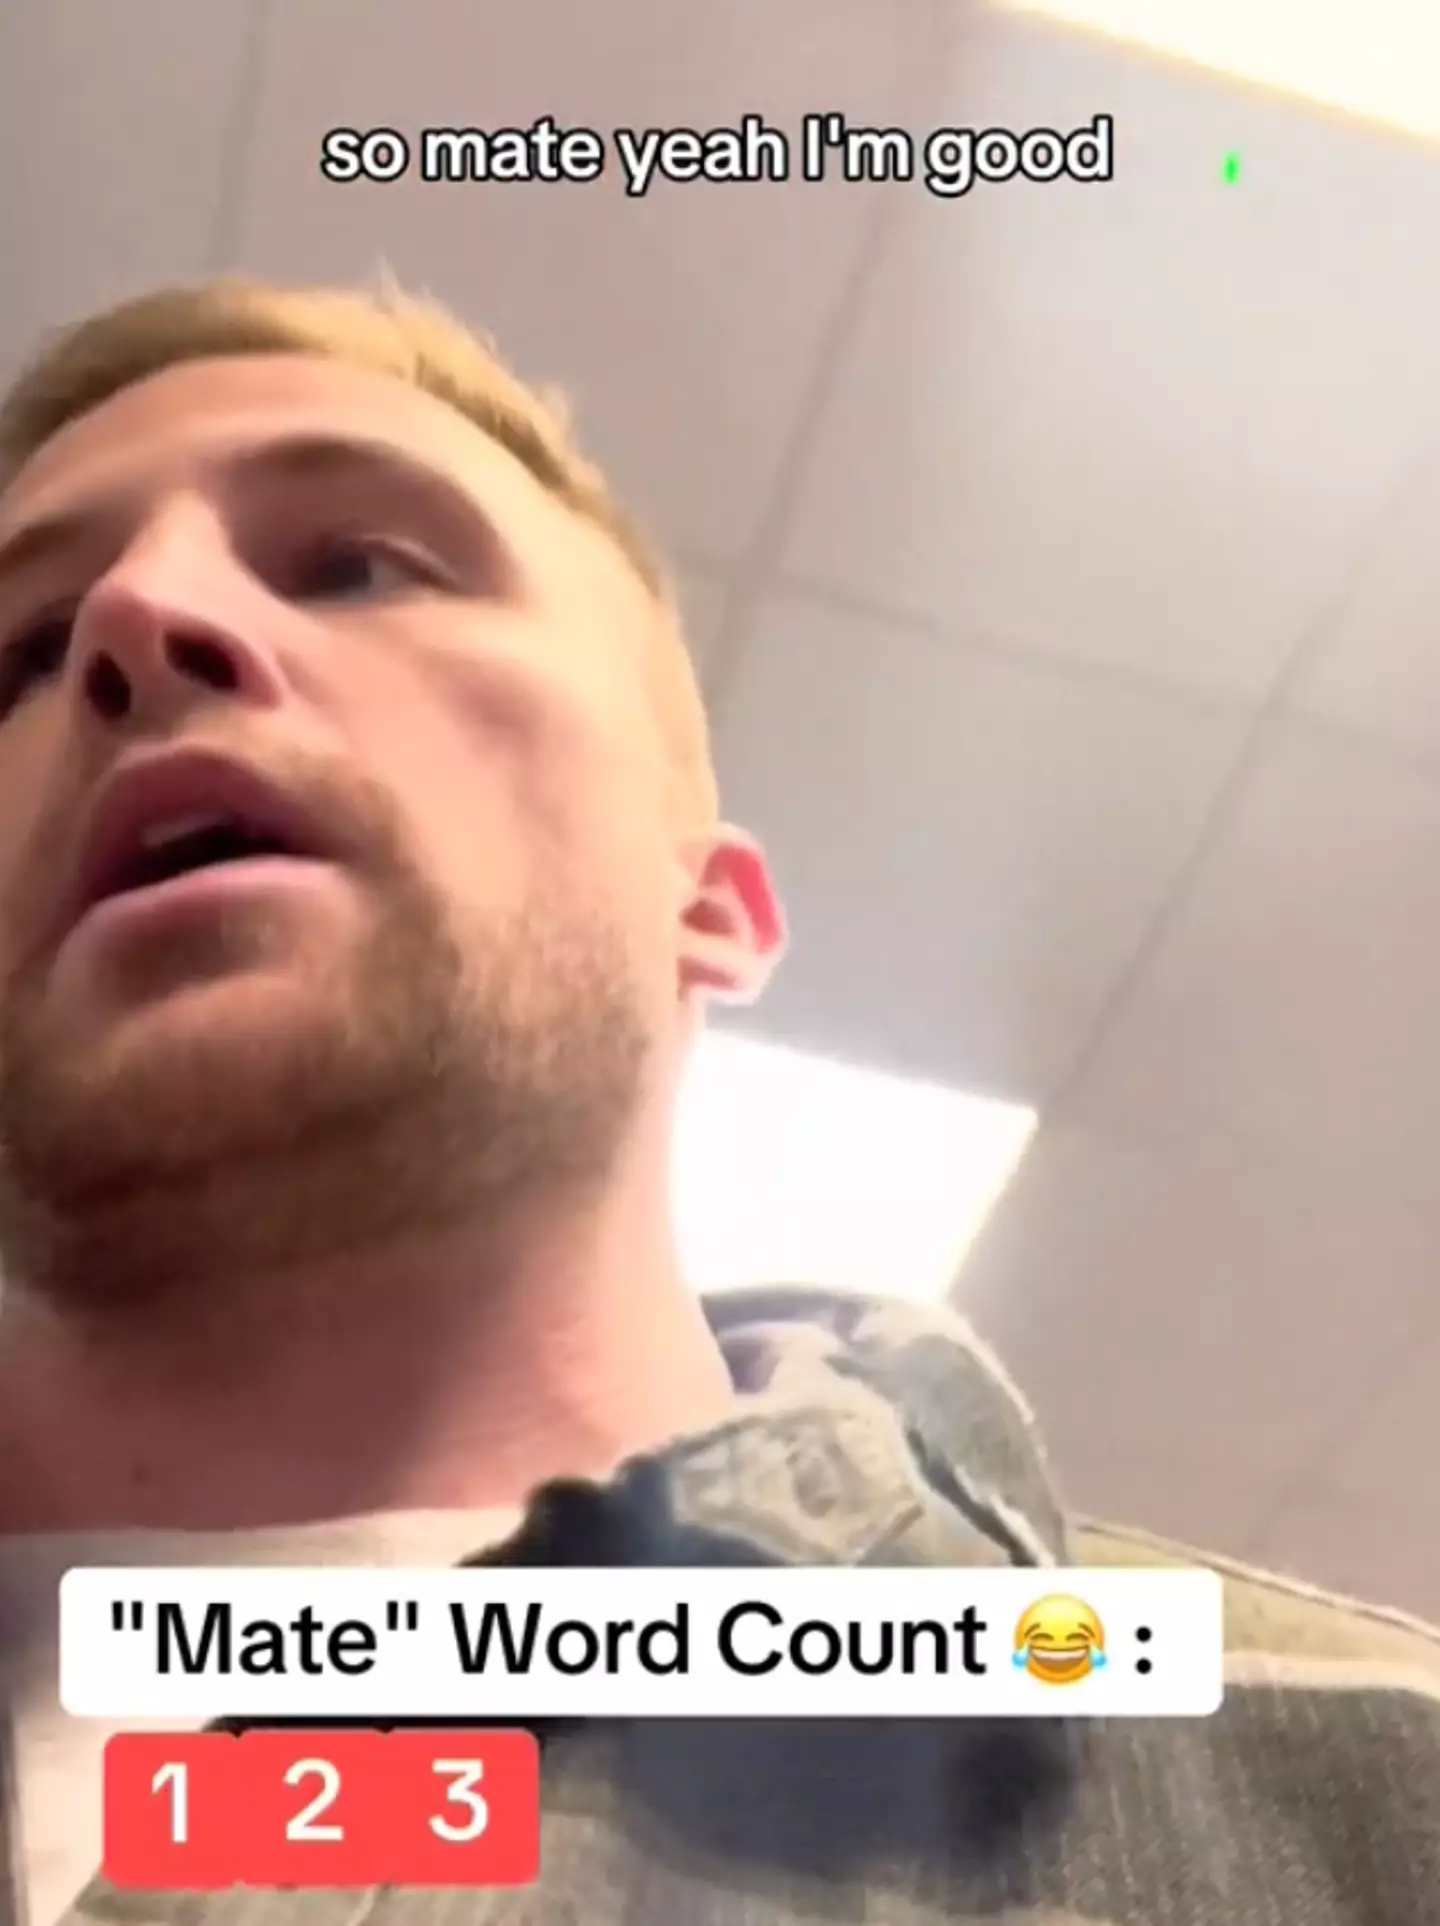 He counted how many times he said 'mate'.